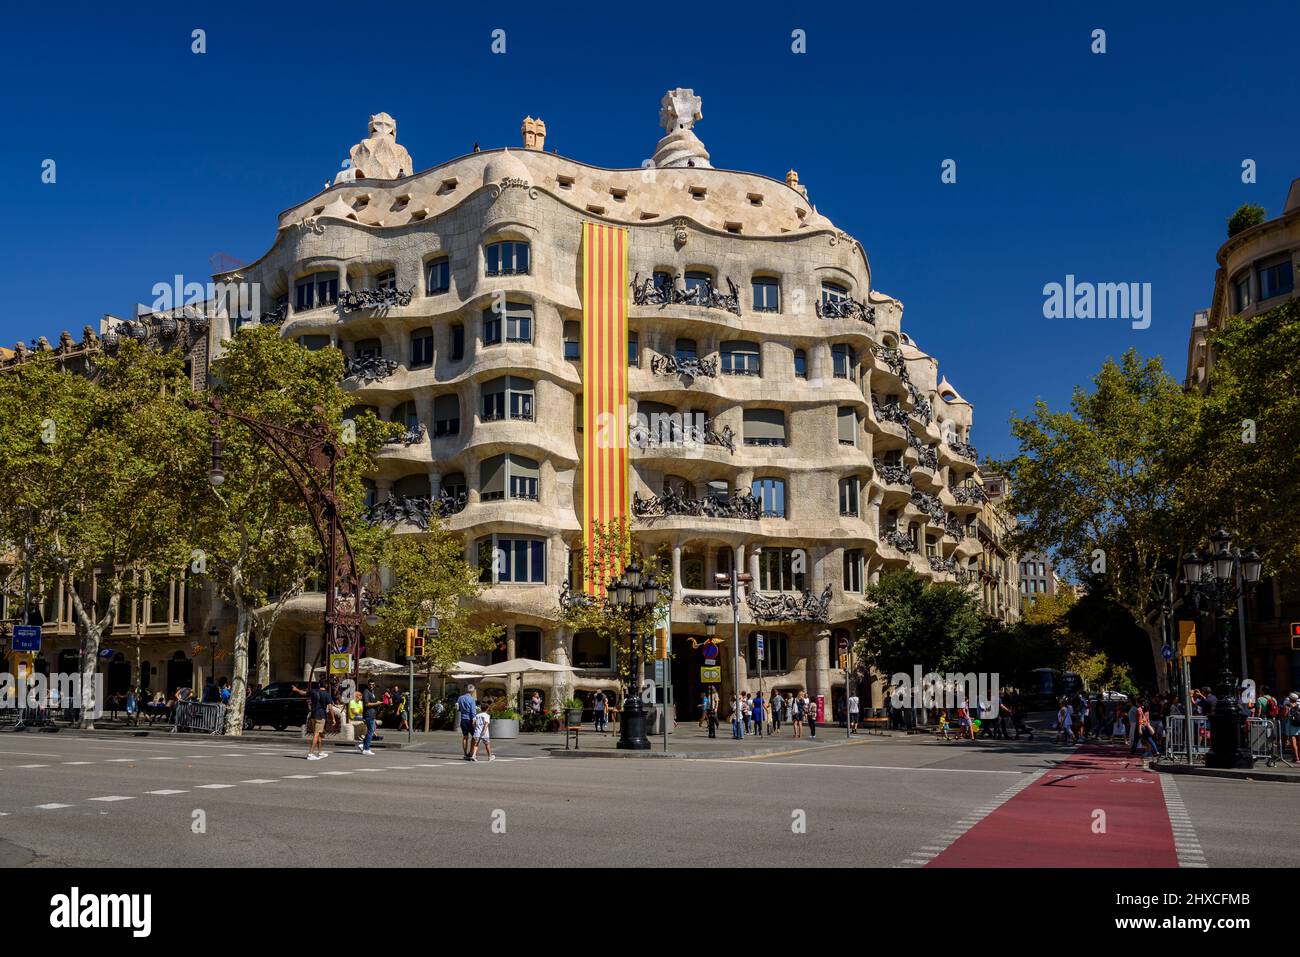 Gaudí's La Pedrera (Casa Milà) with the Catalan flag in commemoration of September 11, Catalonian Day (Barcelona, Catalonia, Spain) Stock Photo